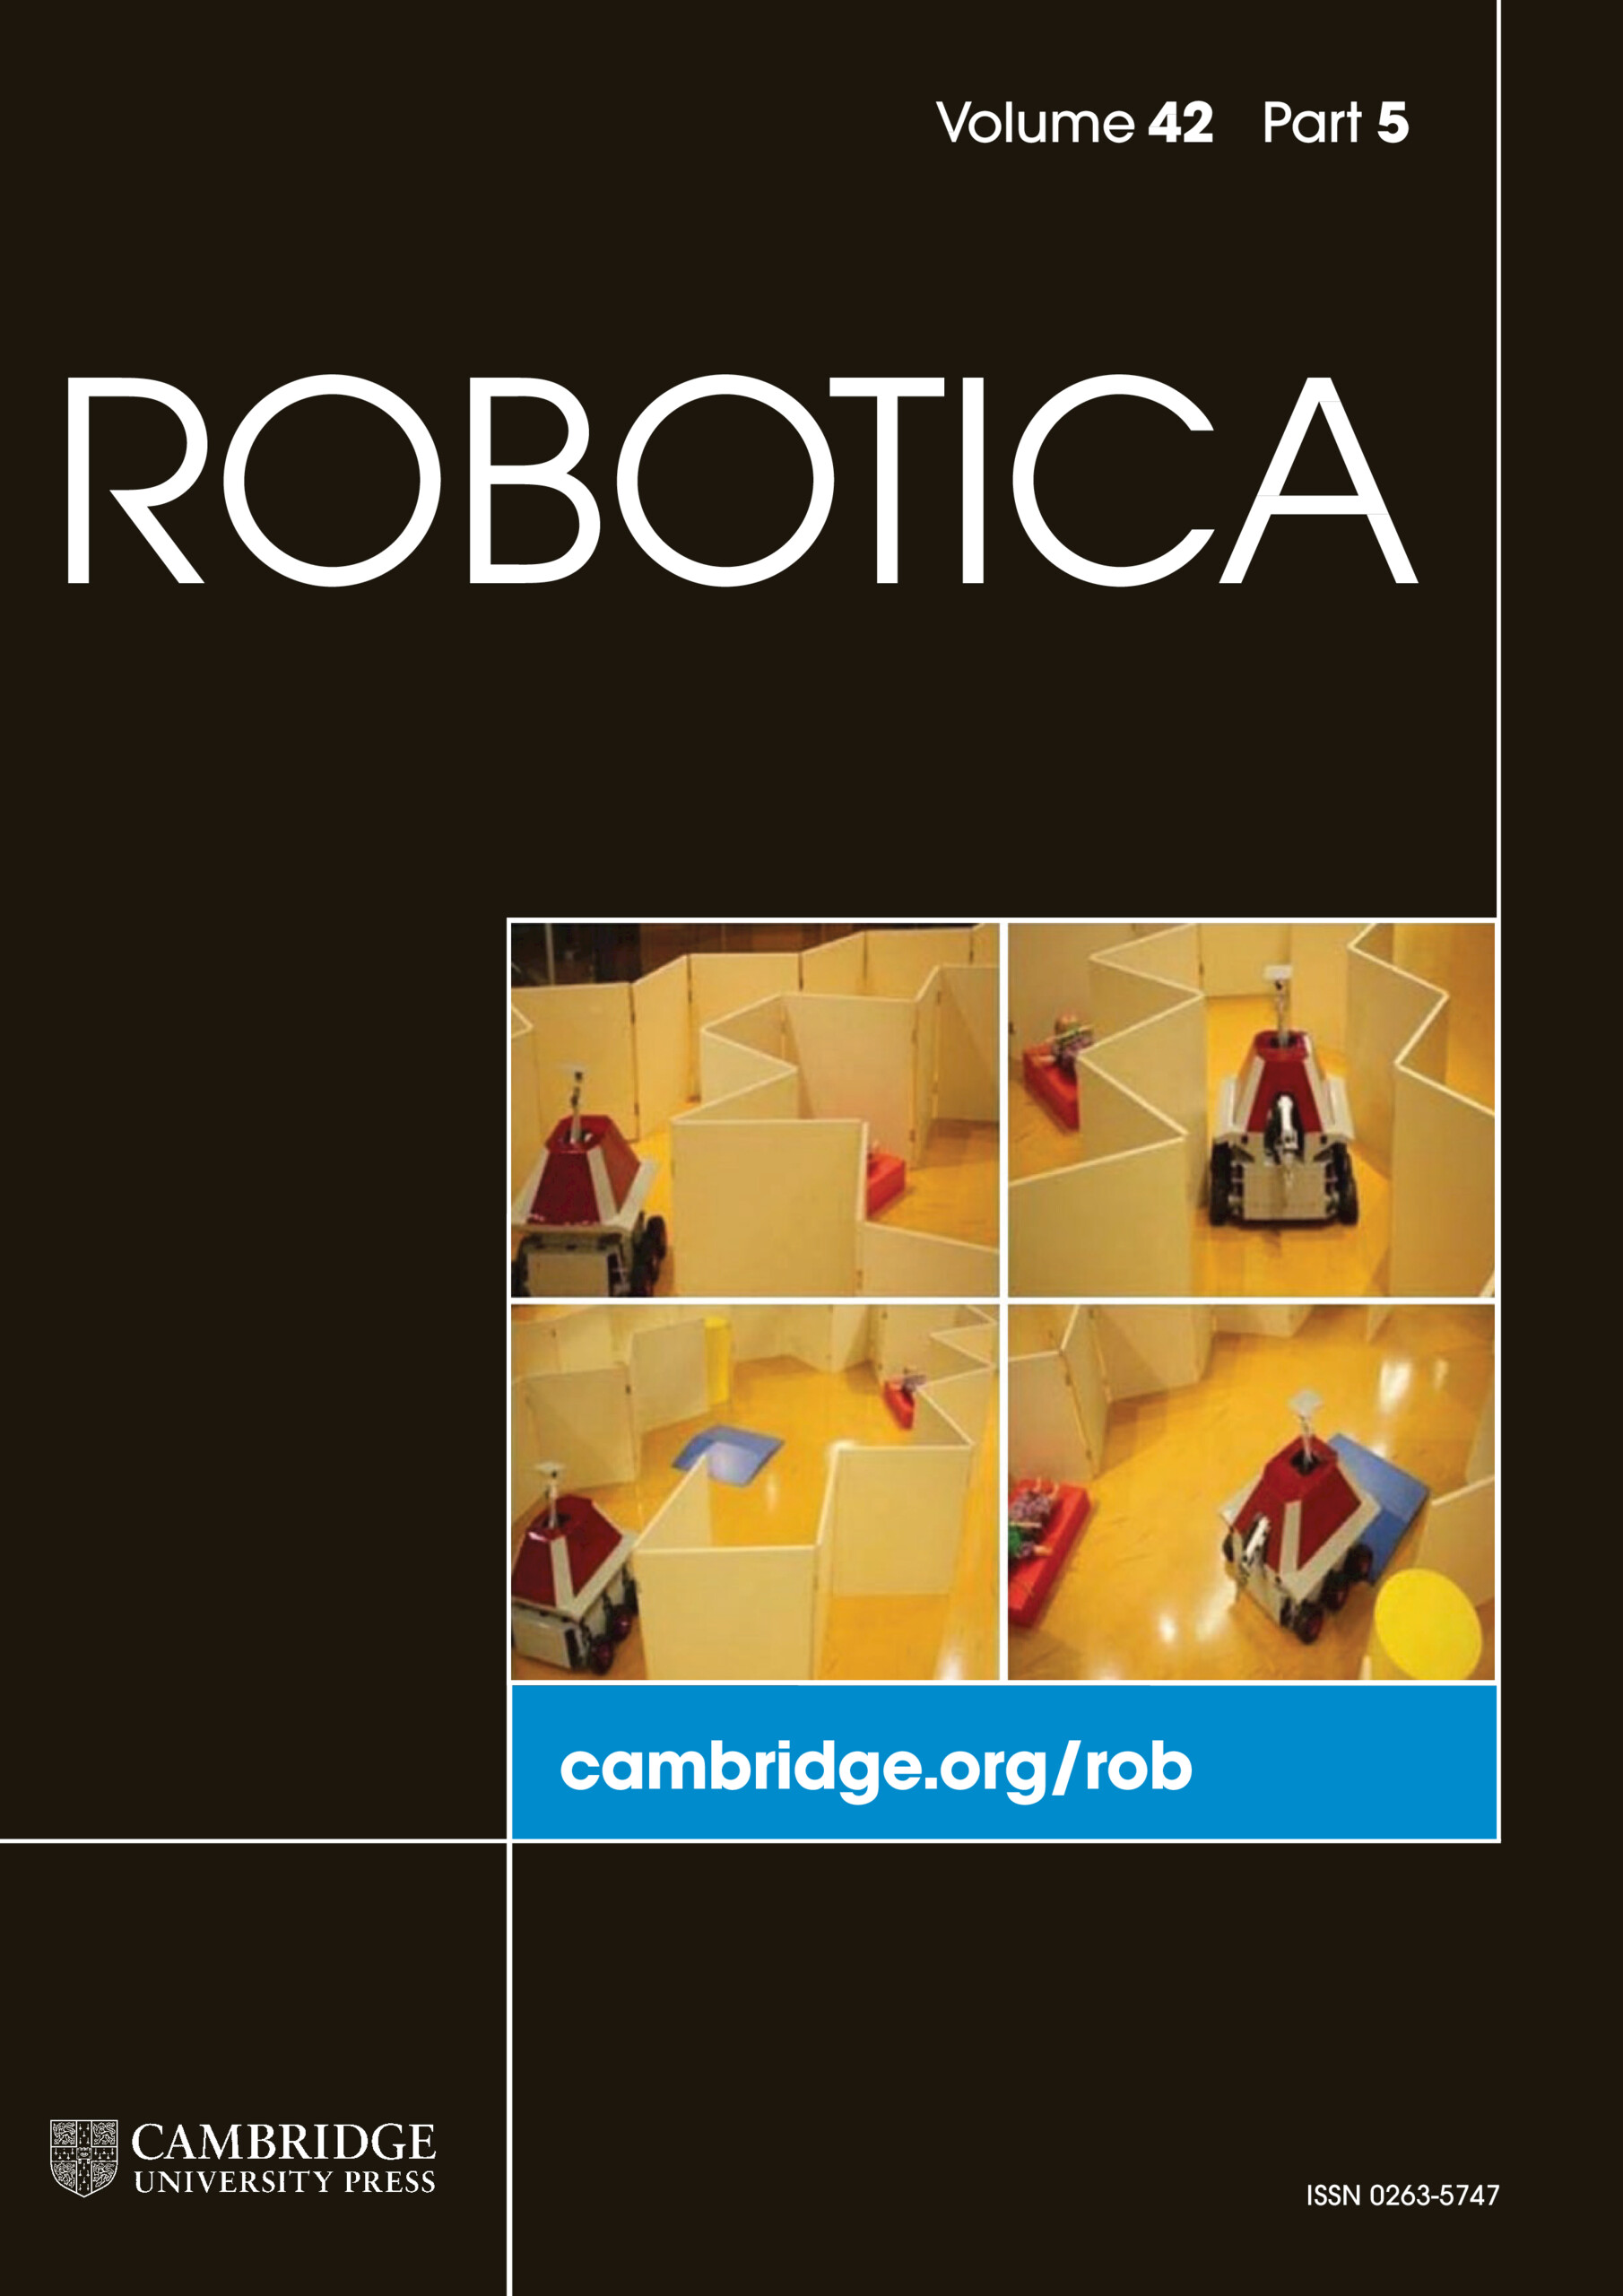 Advanced Core | Cambridge modeling soft Robotica | in ChainQueen robot